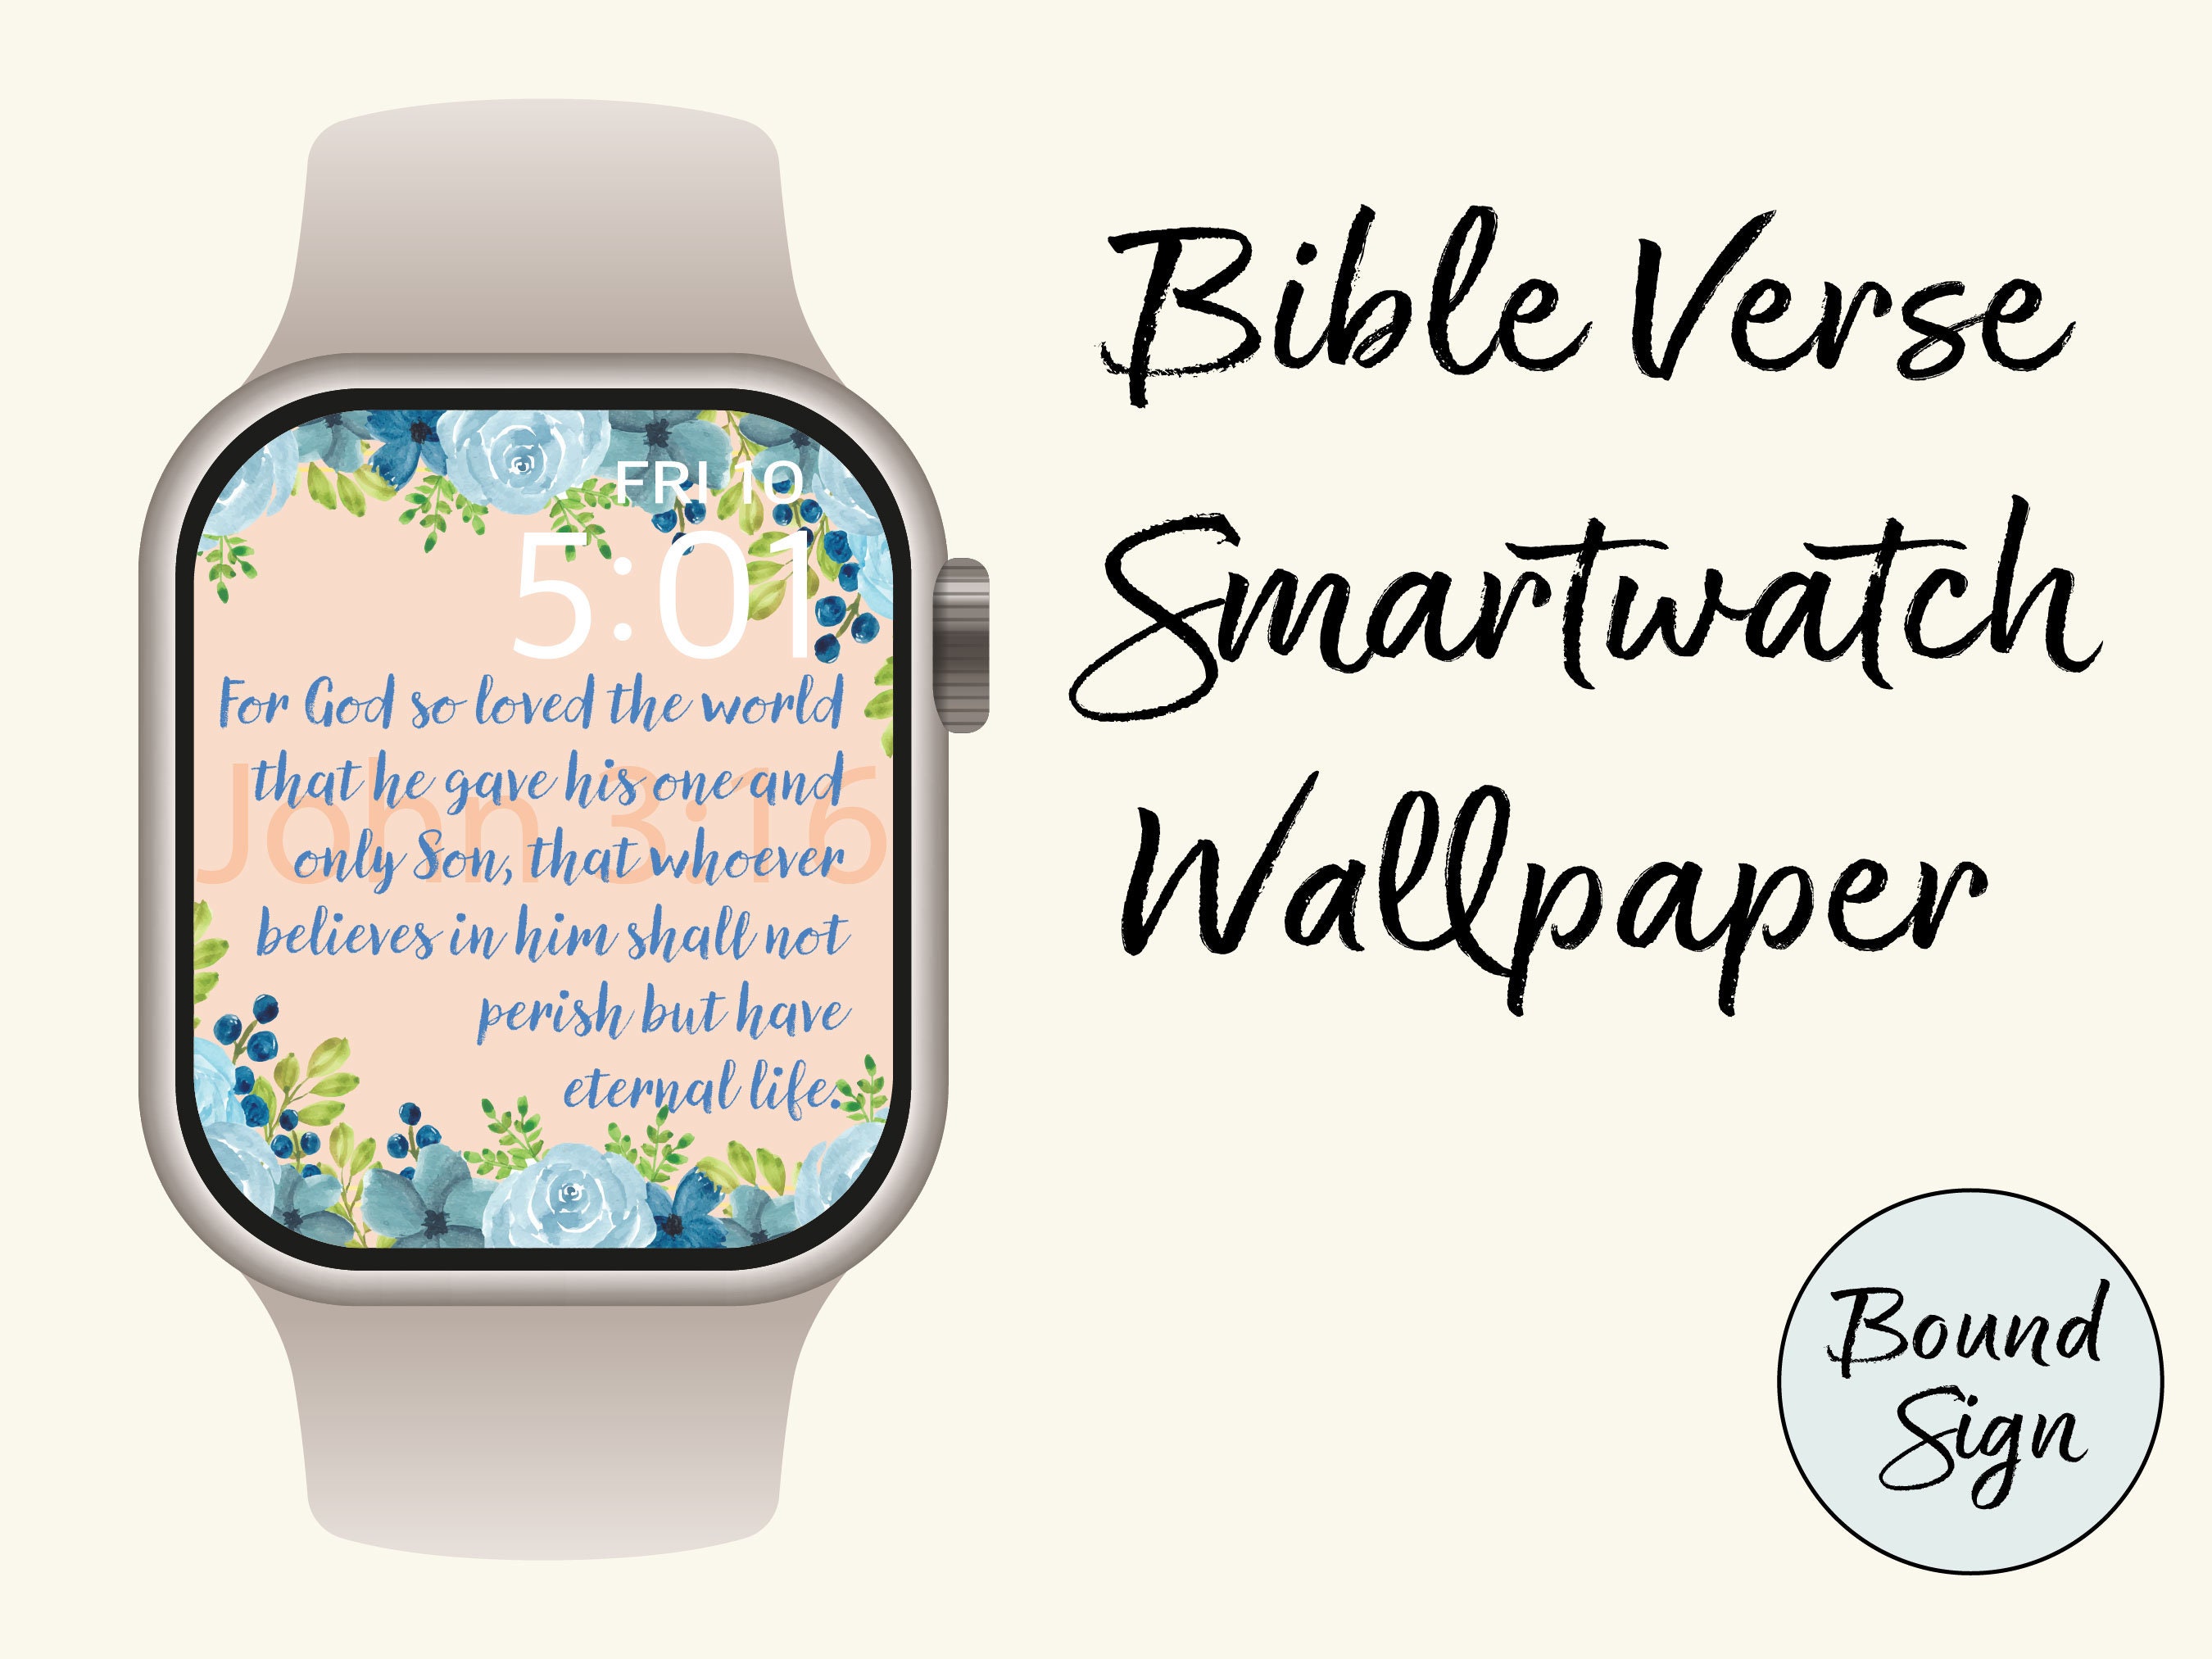 50 Free Christian Desktop Wallpaper Downloads with Bible Verses – ConnectUS